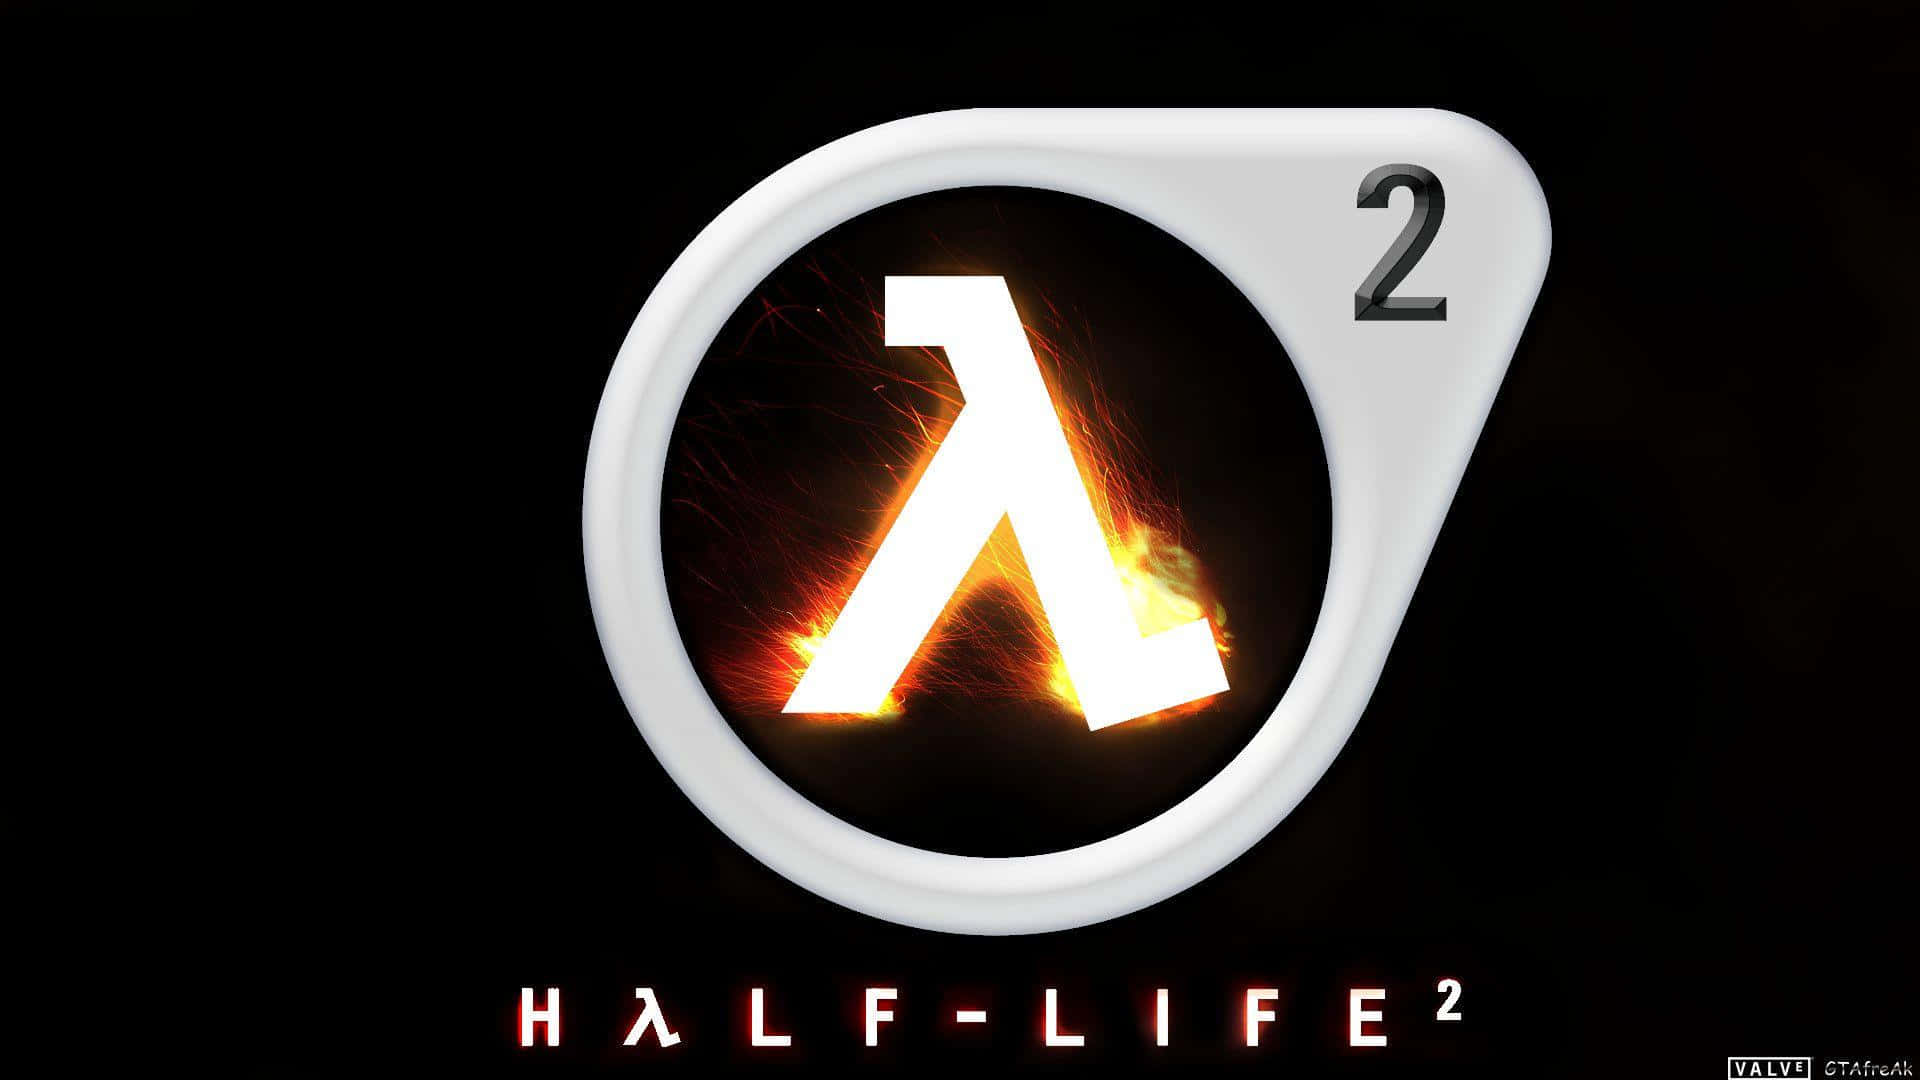 "Explore City 17 in Half Life 2" Wallpaper